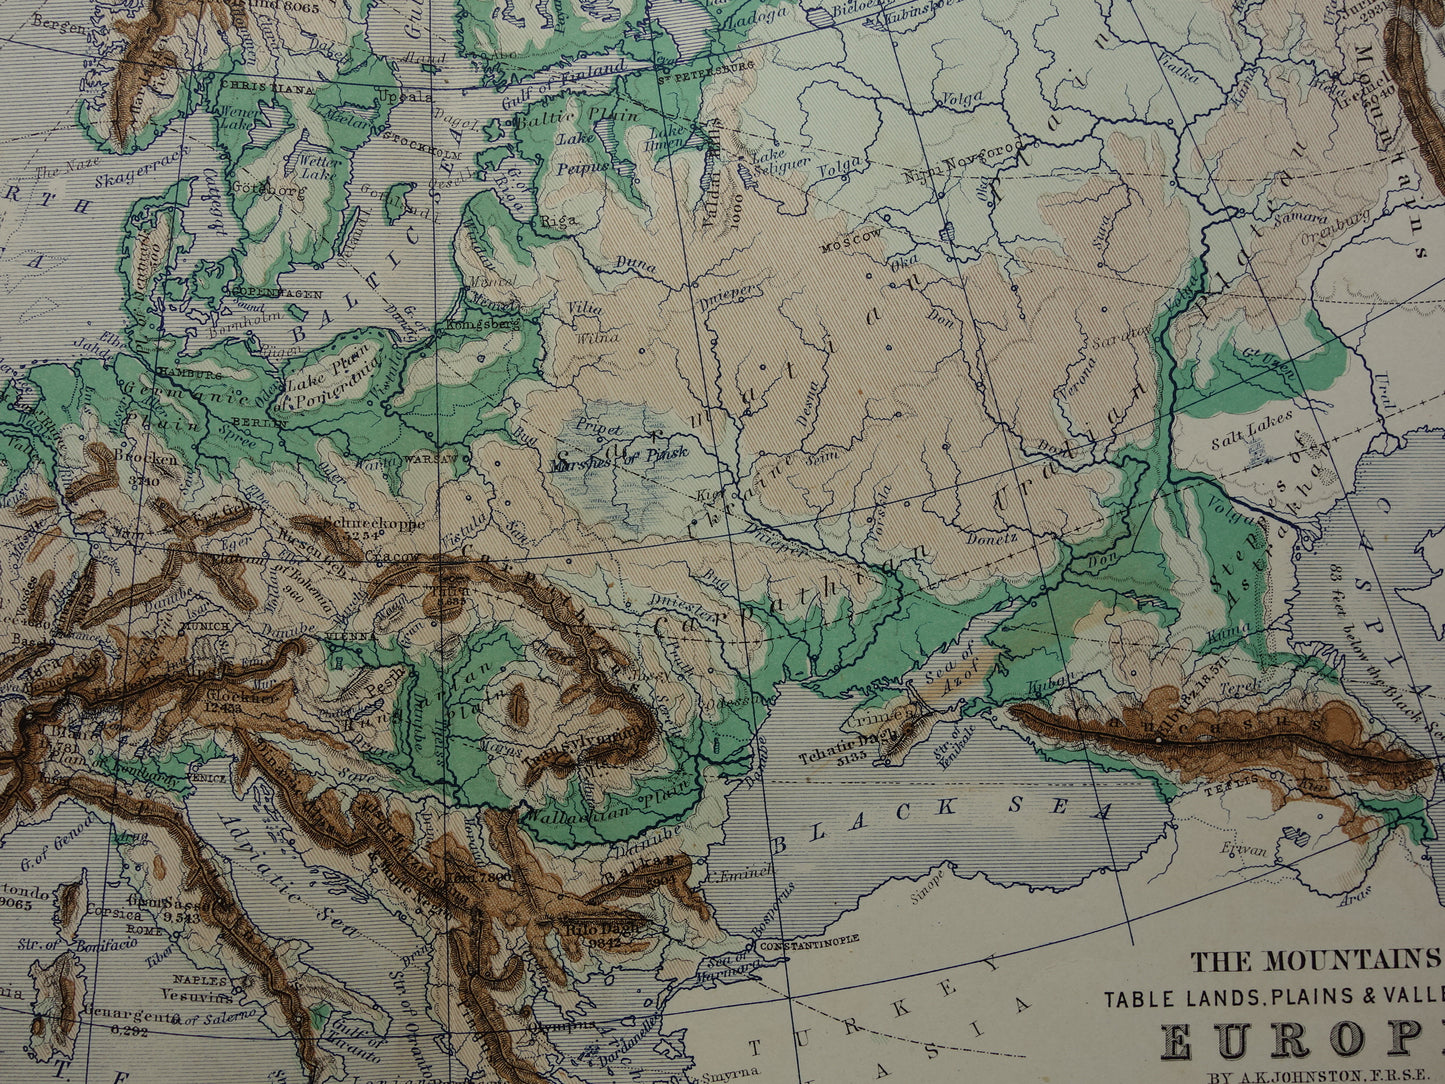 Europa antieke kaart van Europa 140+ jaar oude landkaart van continent uit 1879 - originele vintage hoogtekaart